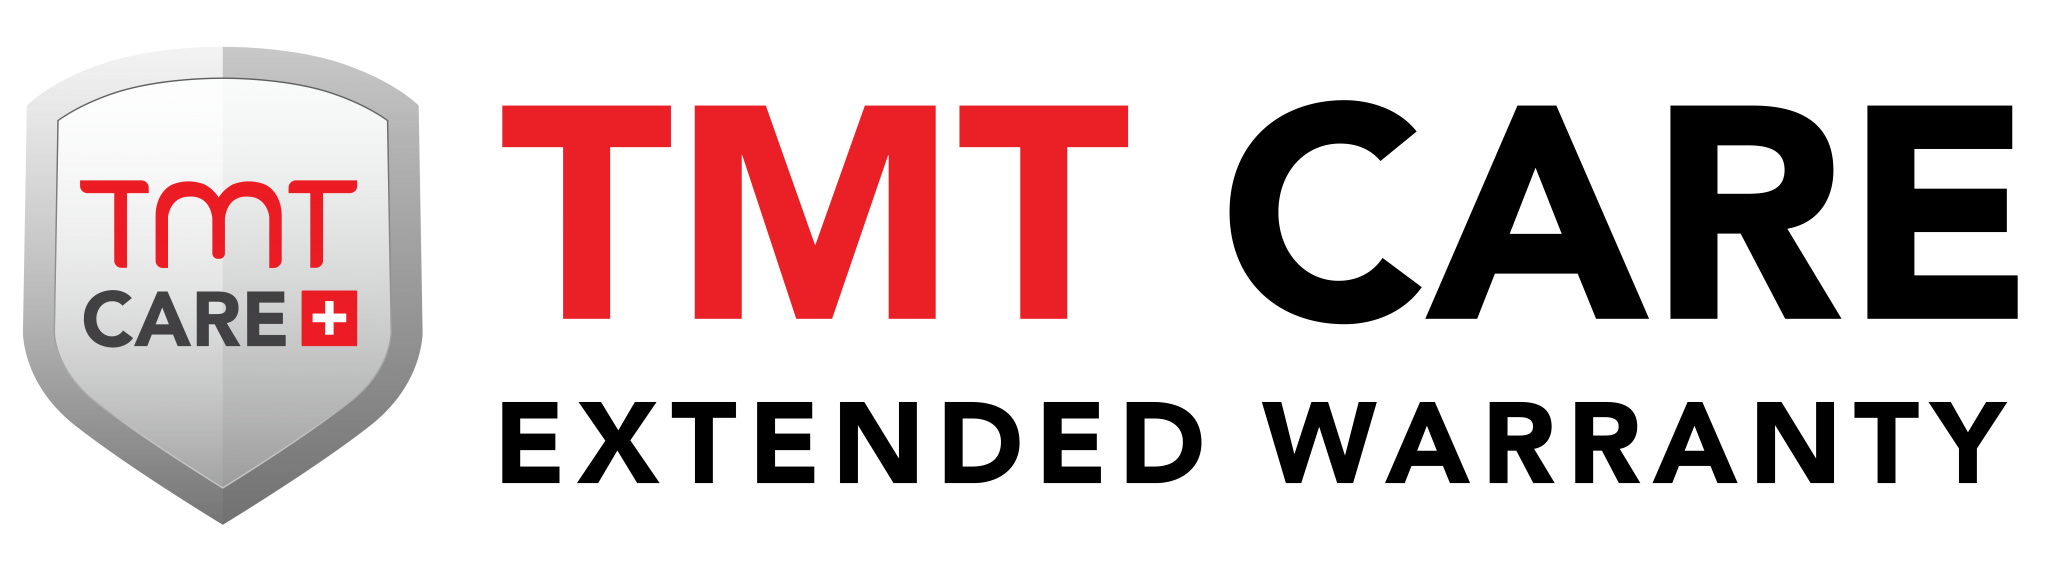 TMT Care Logo 01 2048x565 1